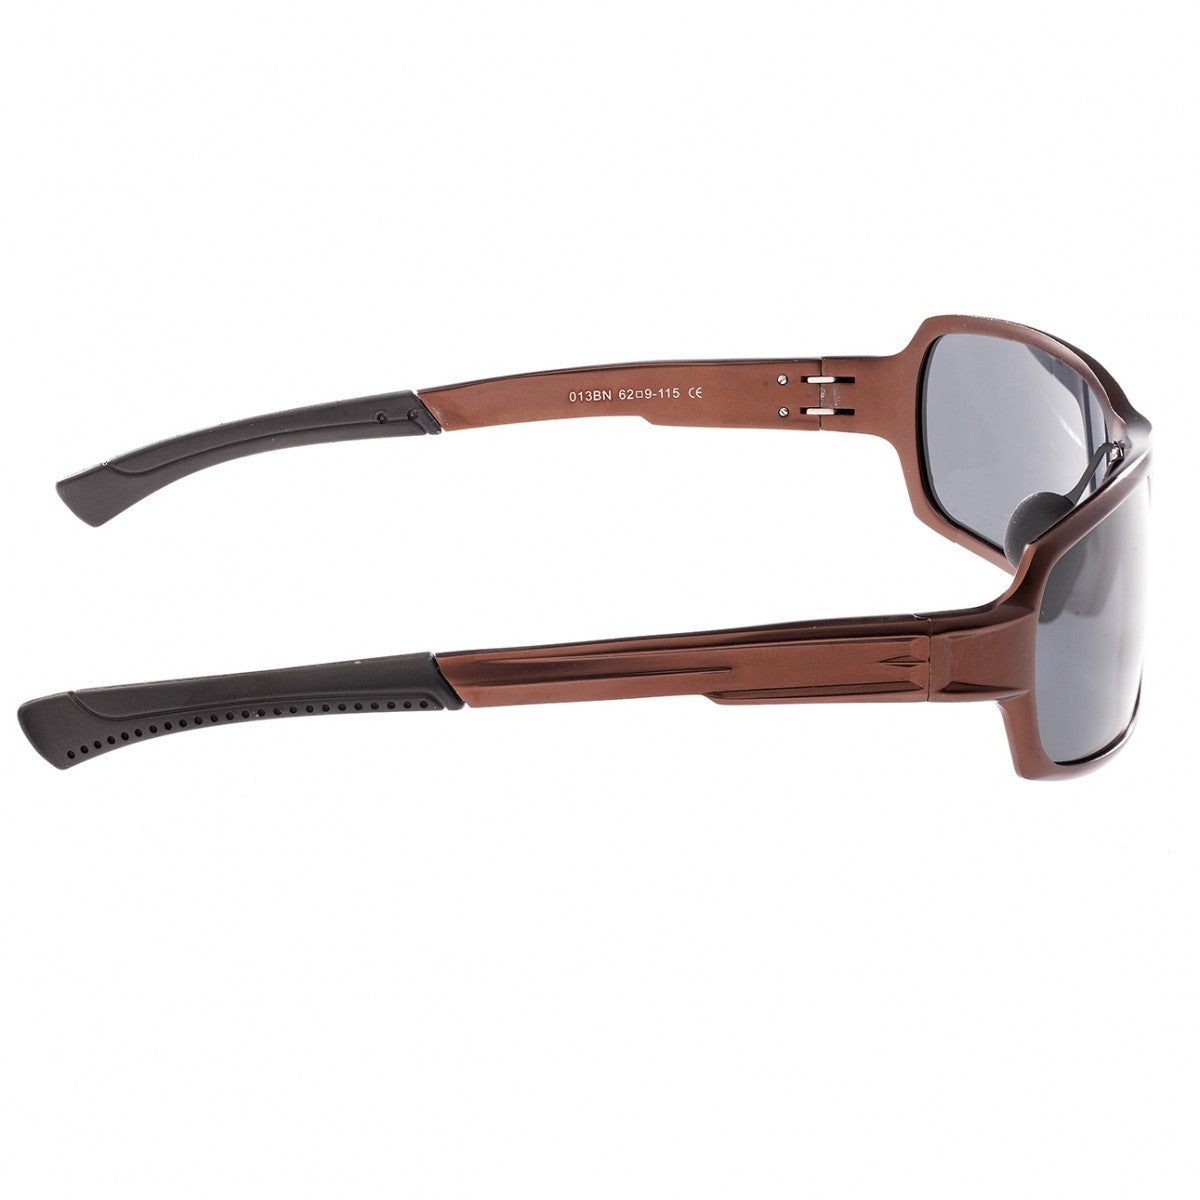 Breed Cosmos Aluminium Polarized Sunglasses - Brown/Black - BSG013BN